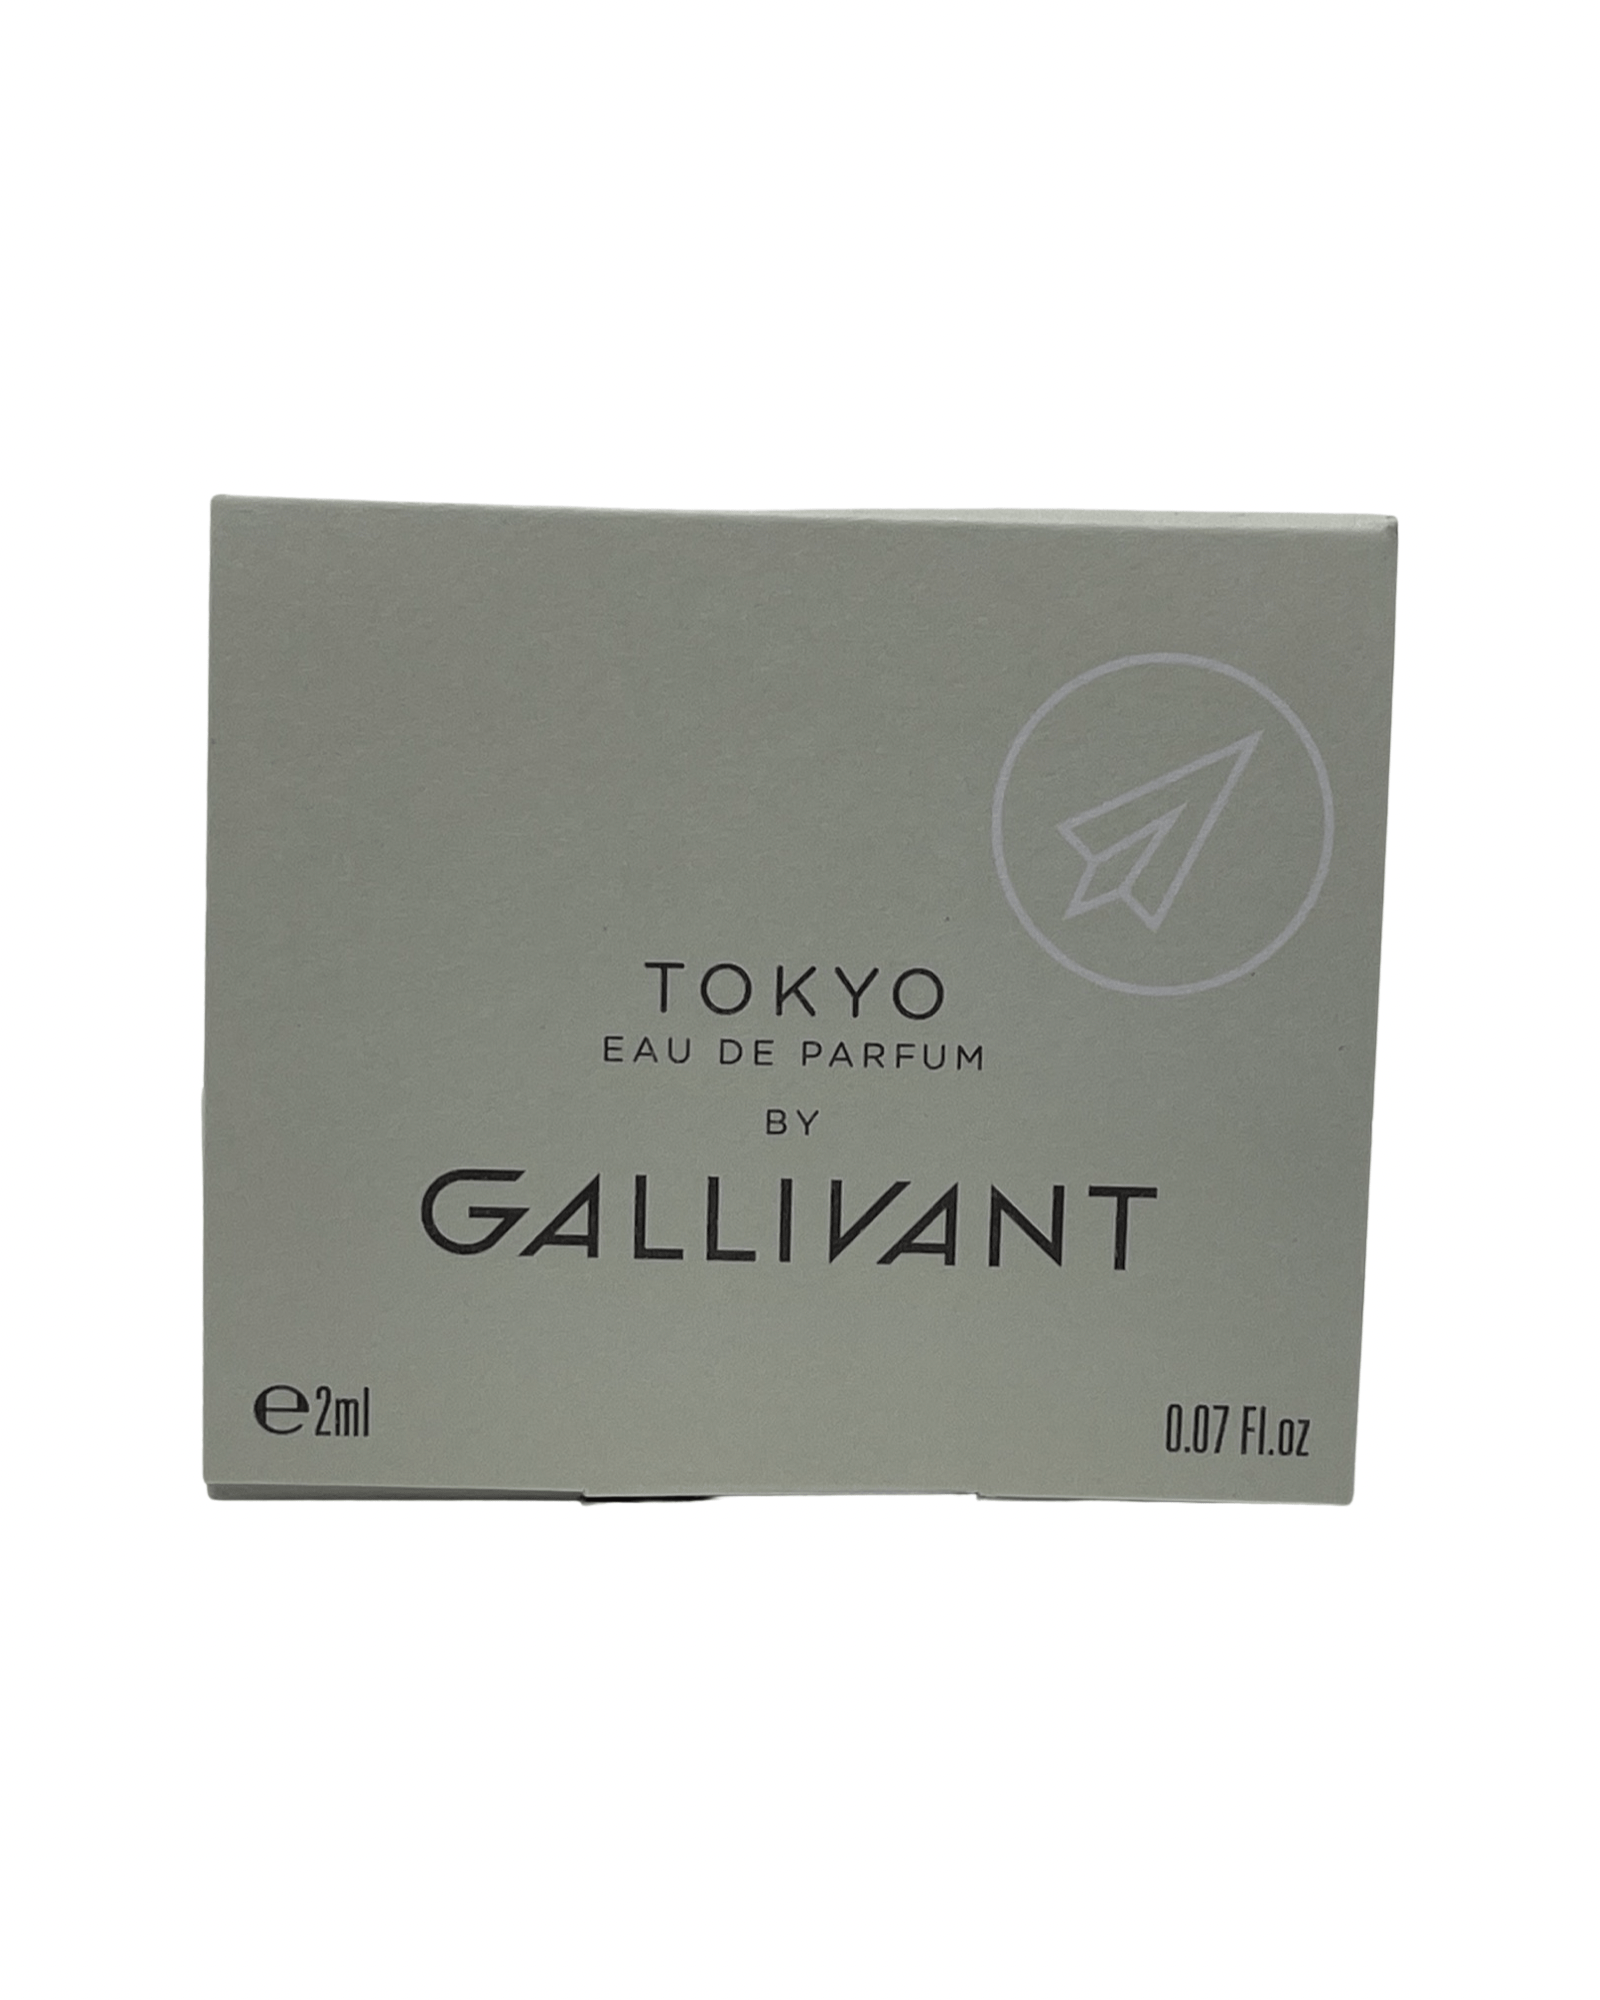 Gallivant - Tokyo - 2ml.